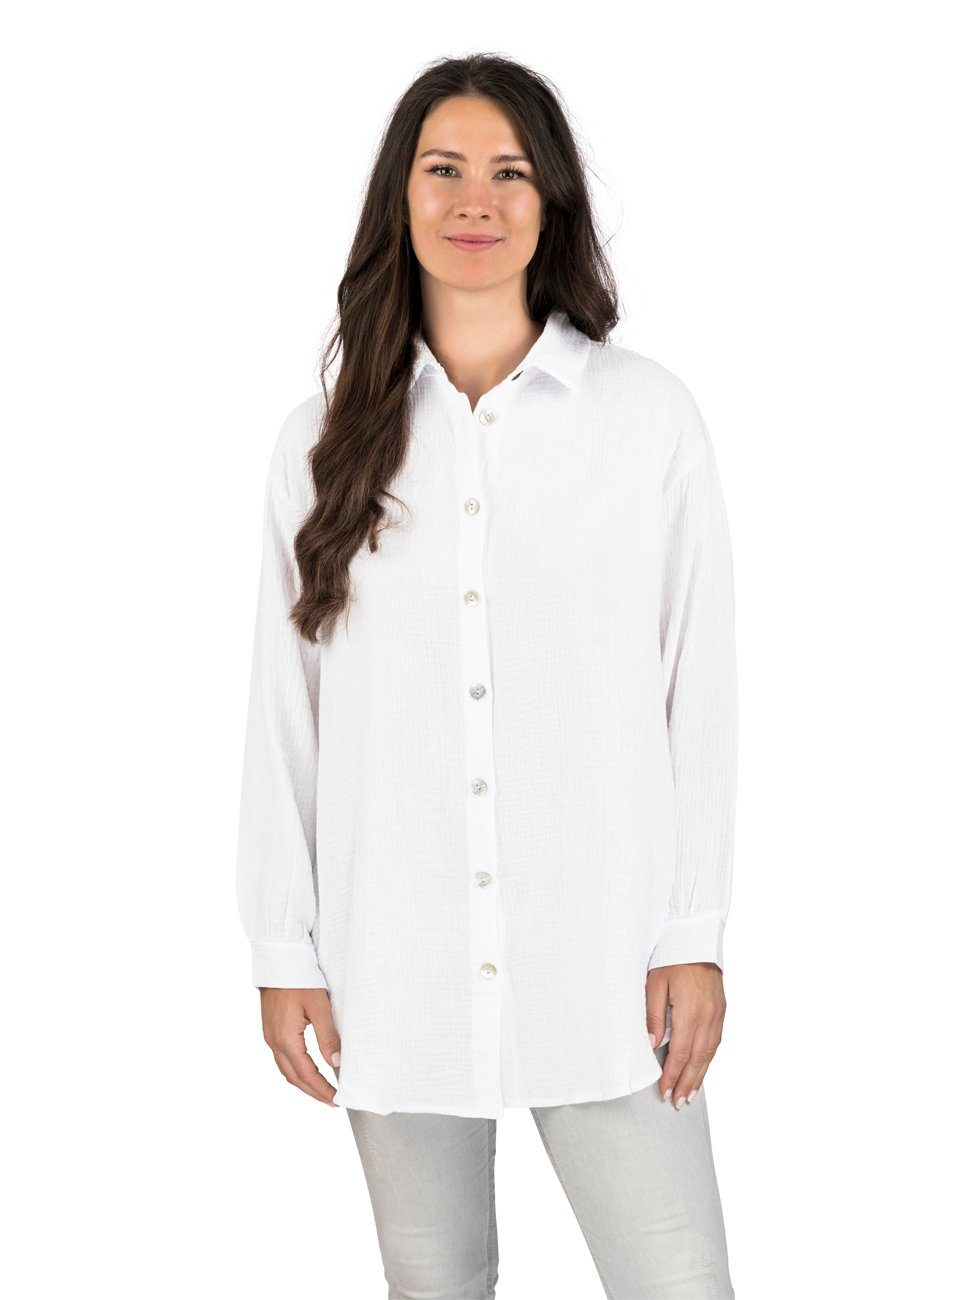 DFMathilda (6200) Bluse Oversize Hemd DENIMFY Hemdbluse Basic aus Baumwolle Fit White Damen 100% Musselin